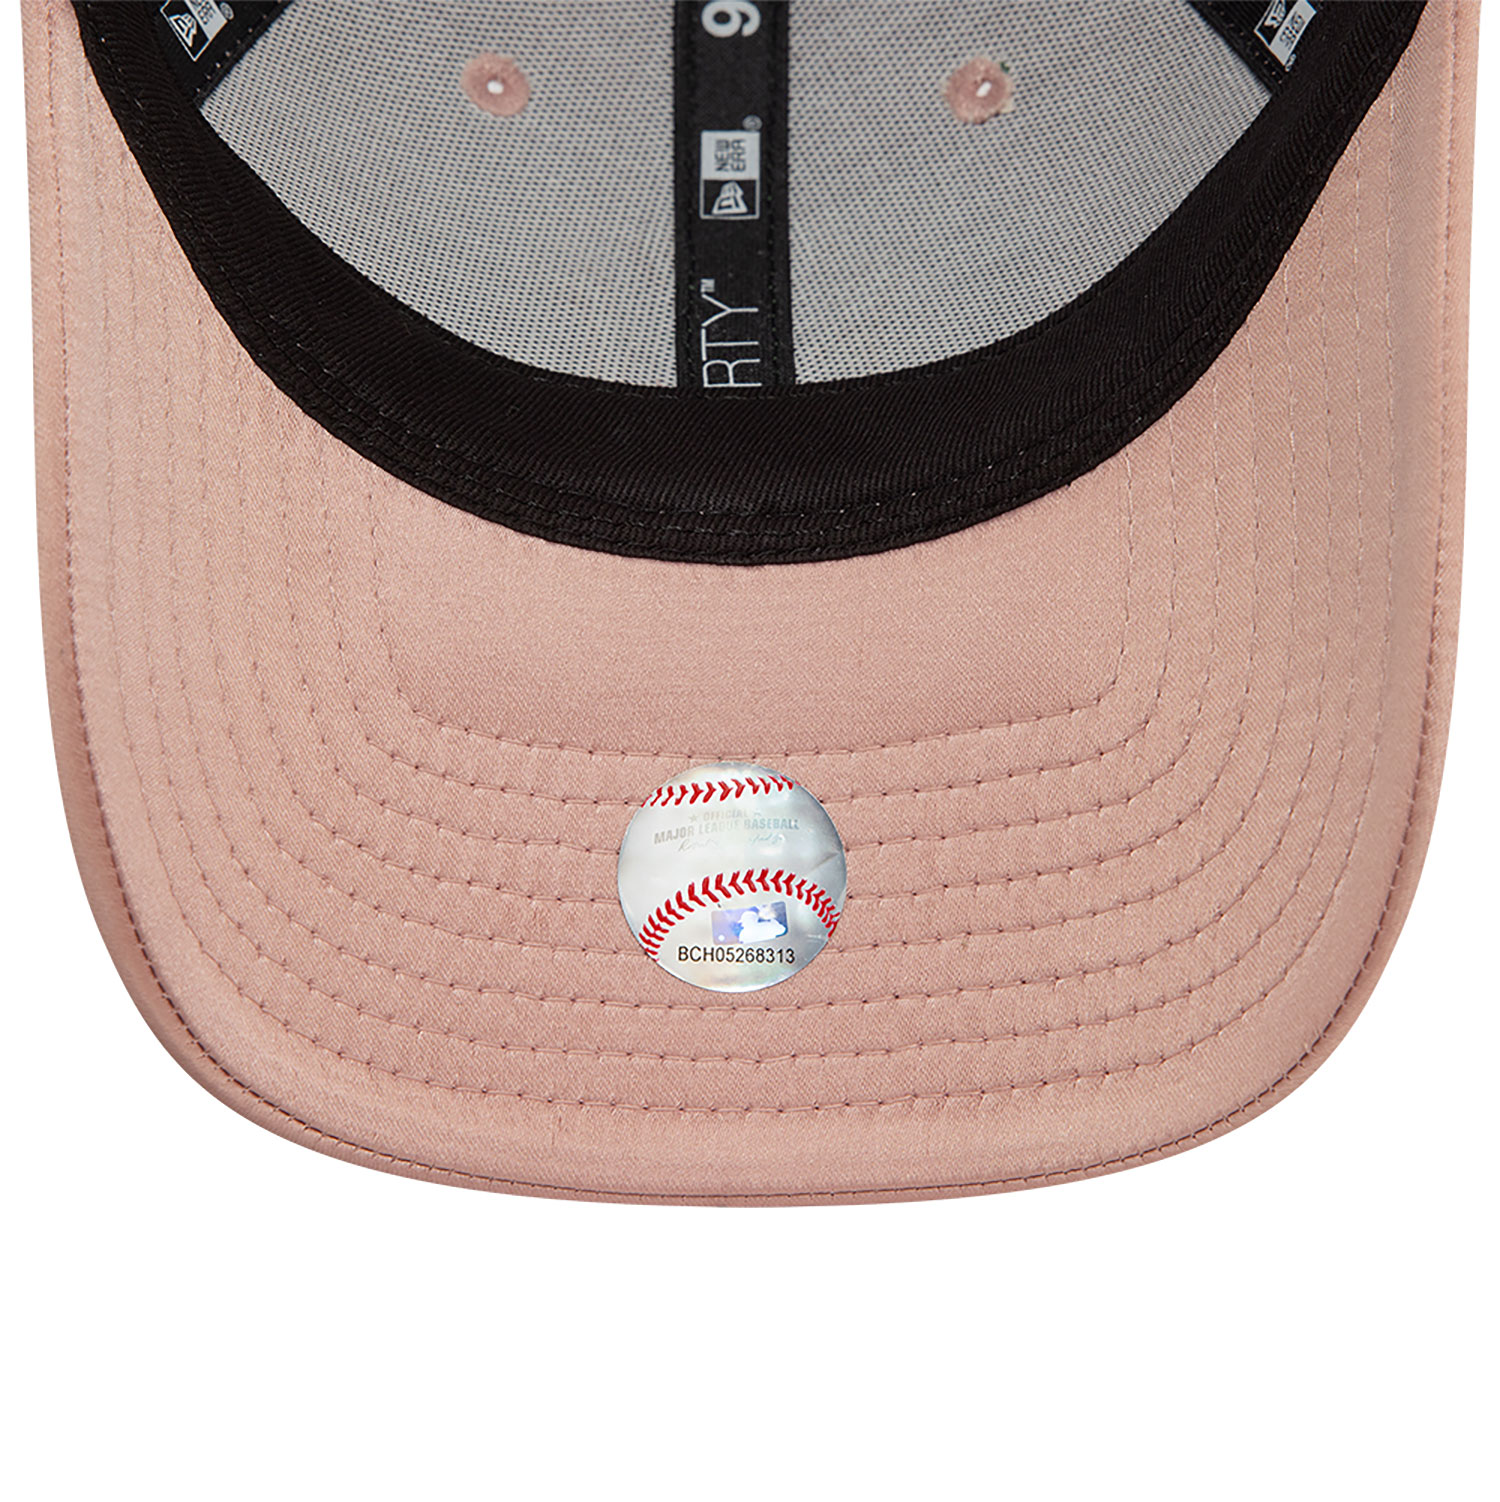 New York Yankees Womens Satin Pastel Pink 9FORTY Adjustable Cap